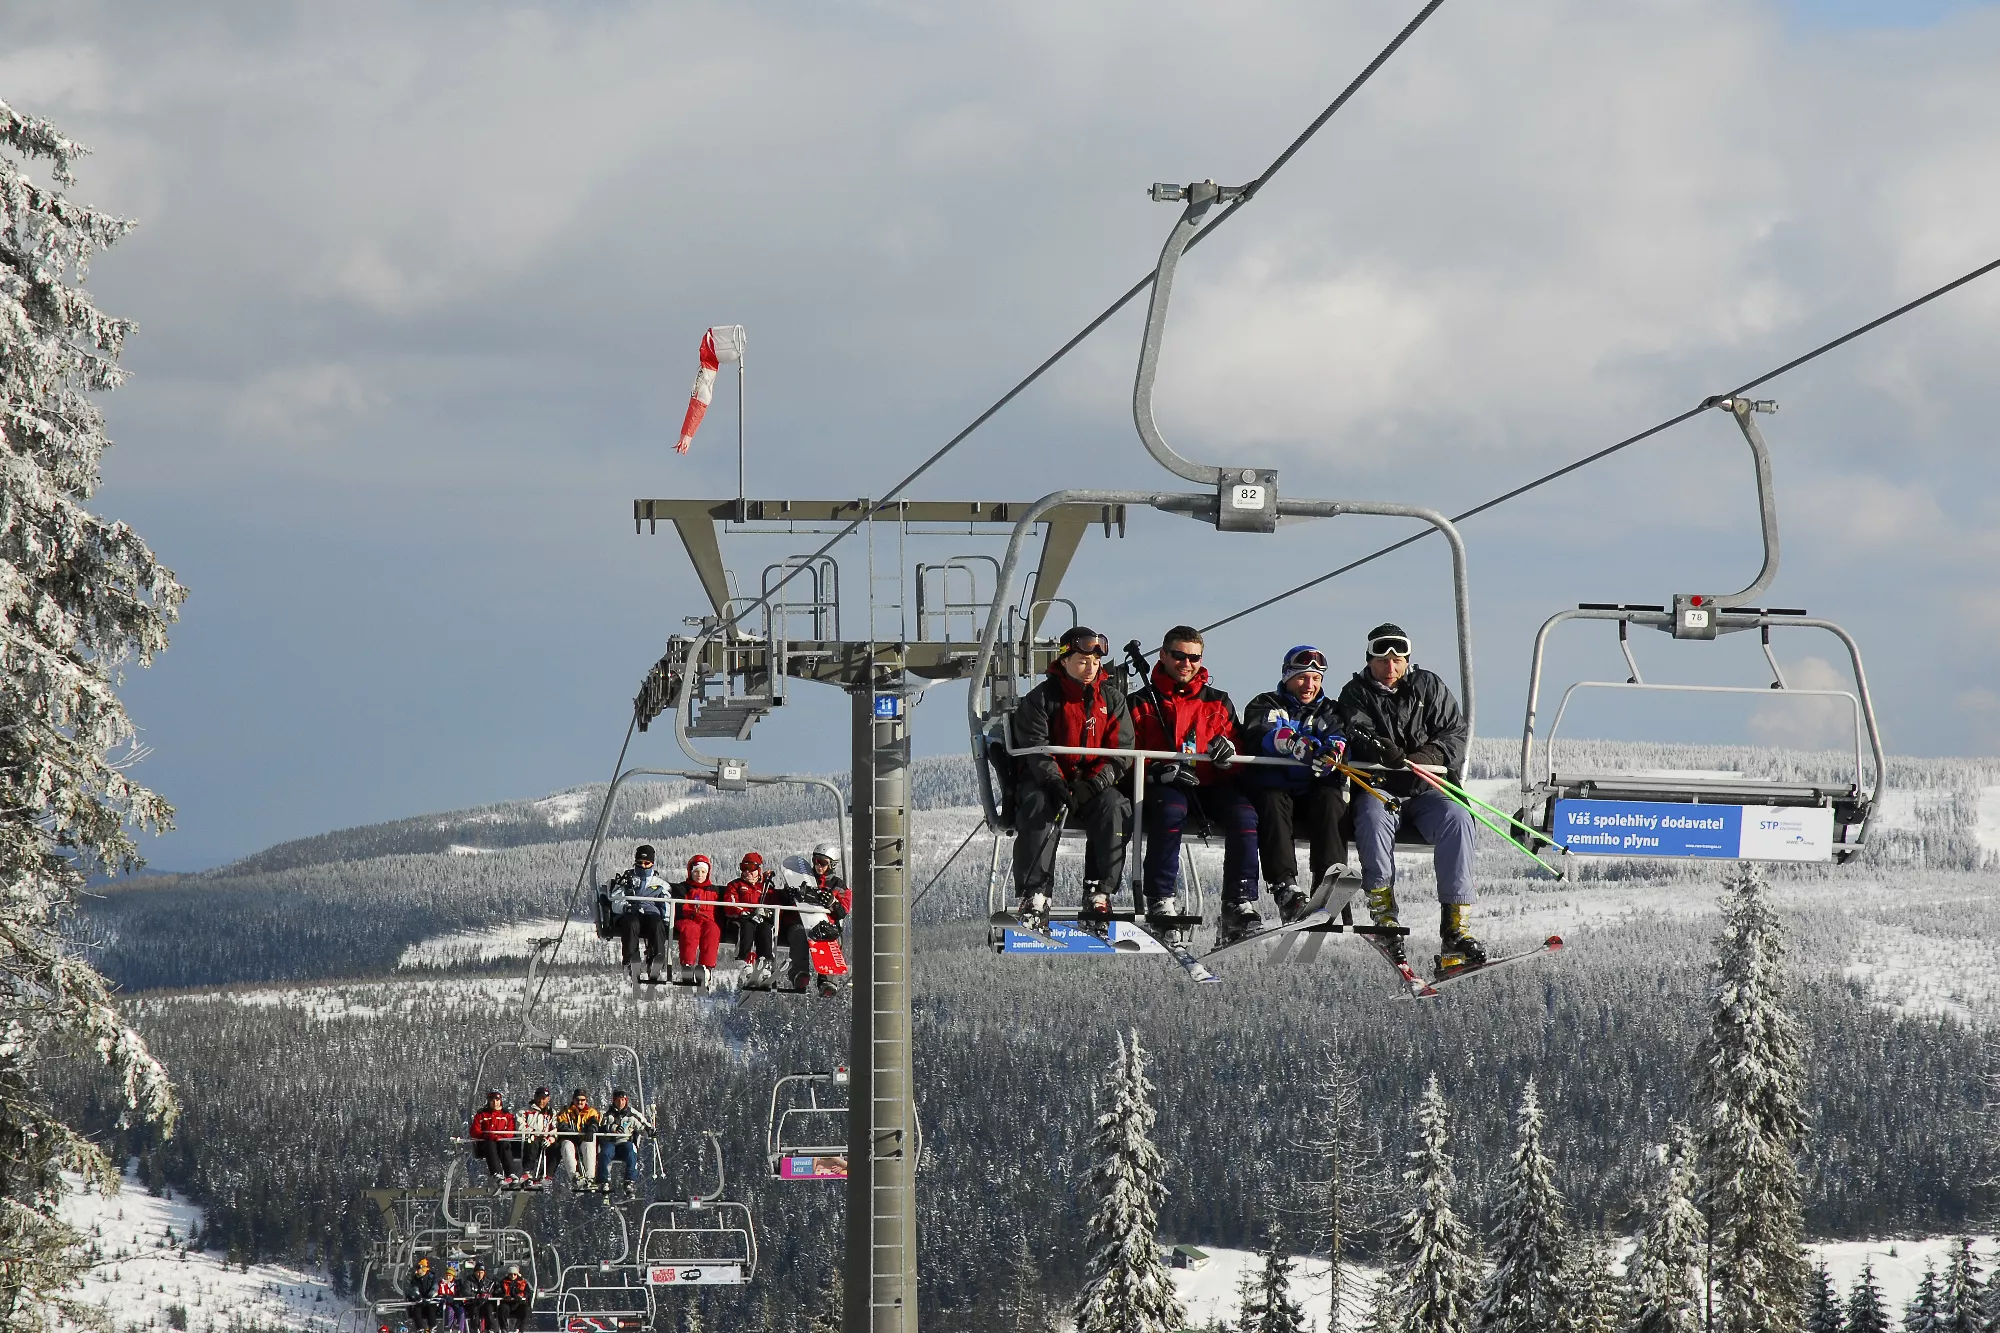 Pec pod Snezkou in Czech Republic, Europe | Snowboarding,Skiing,Snowmobiling - Rated 5.1